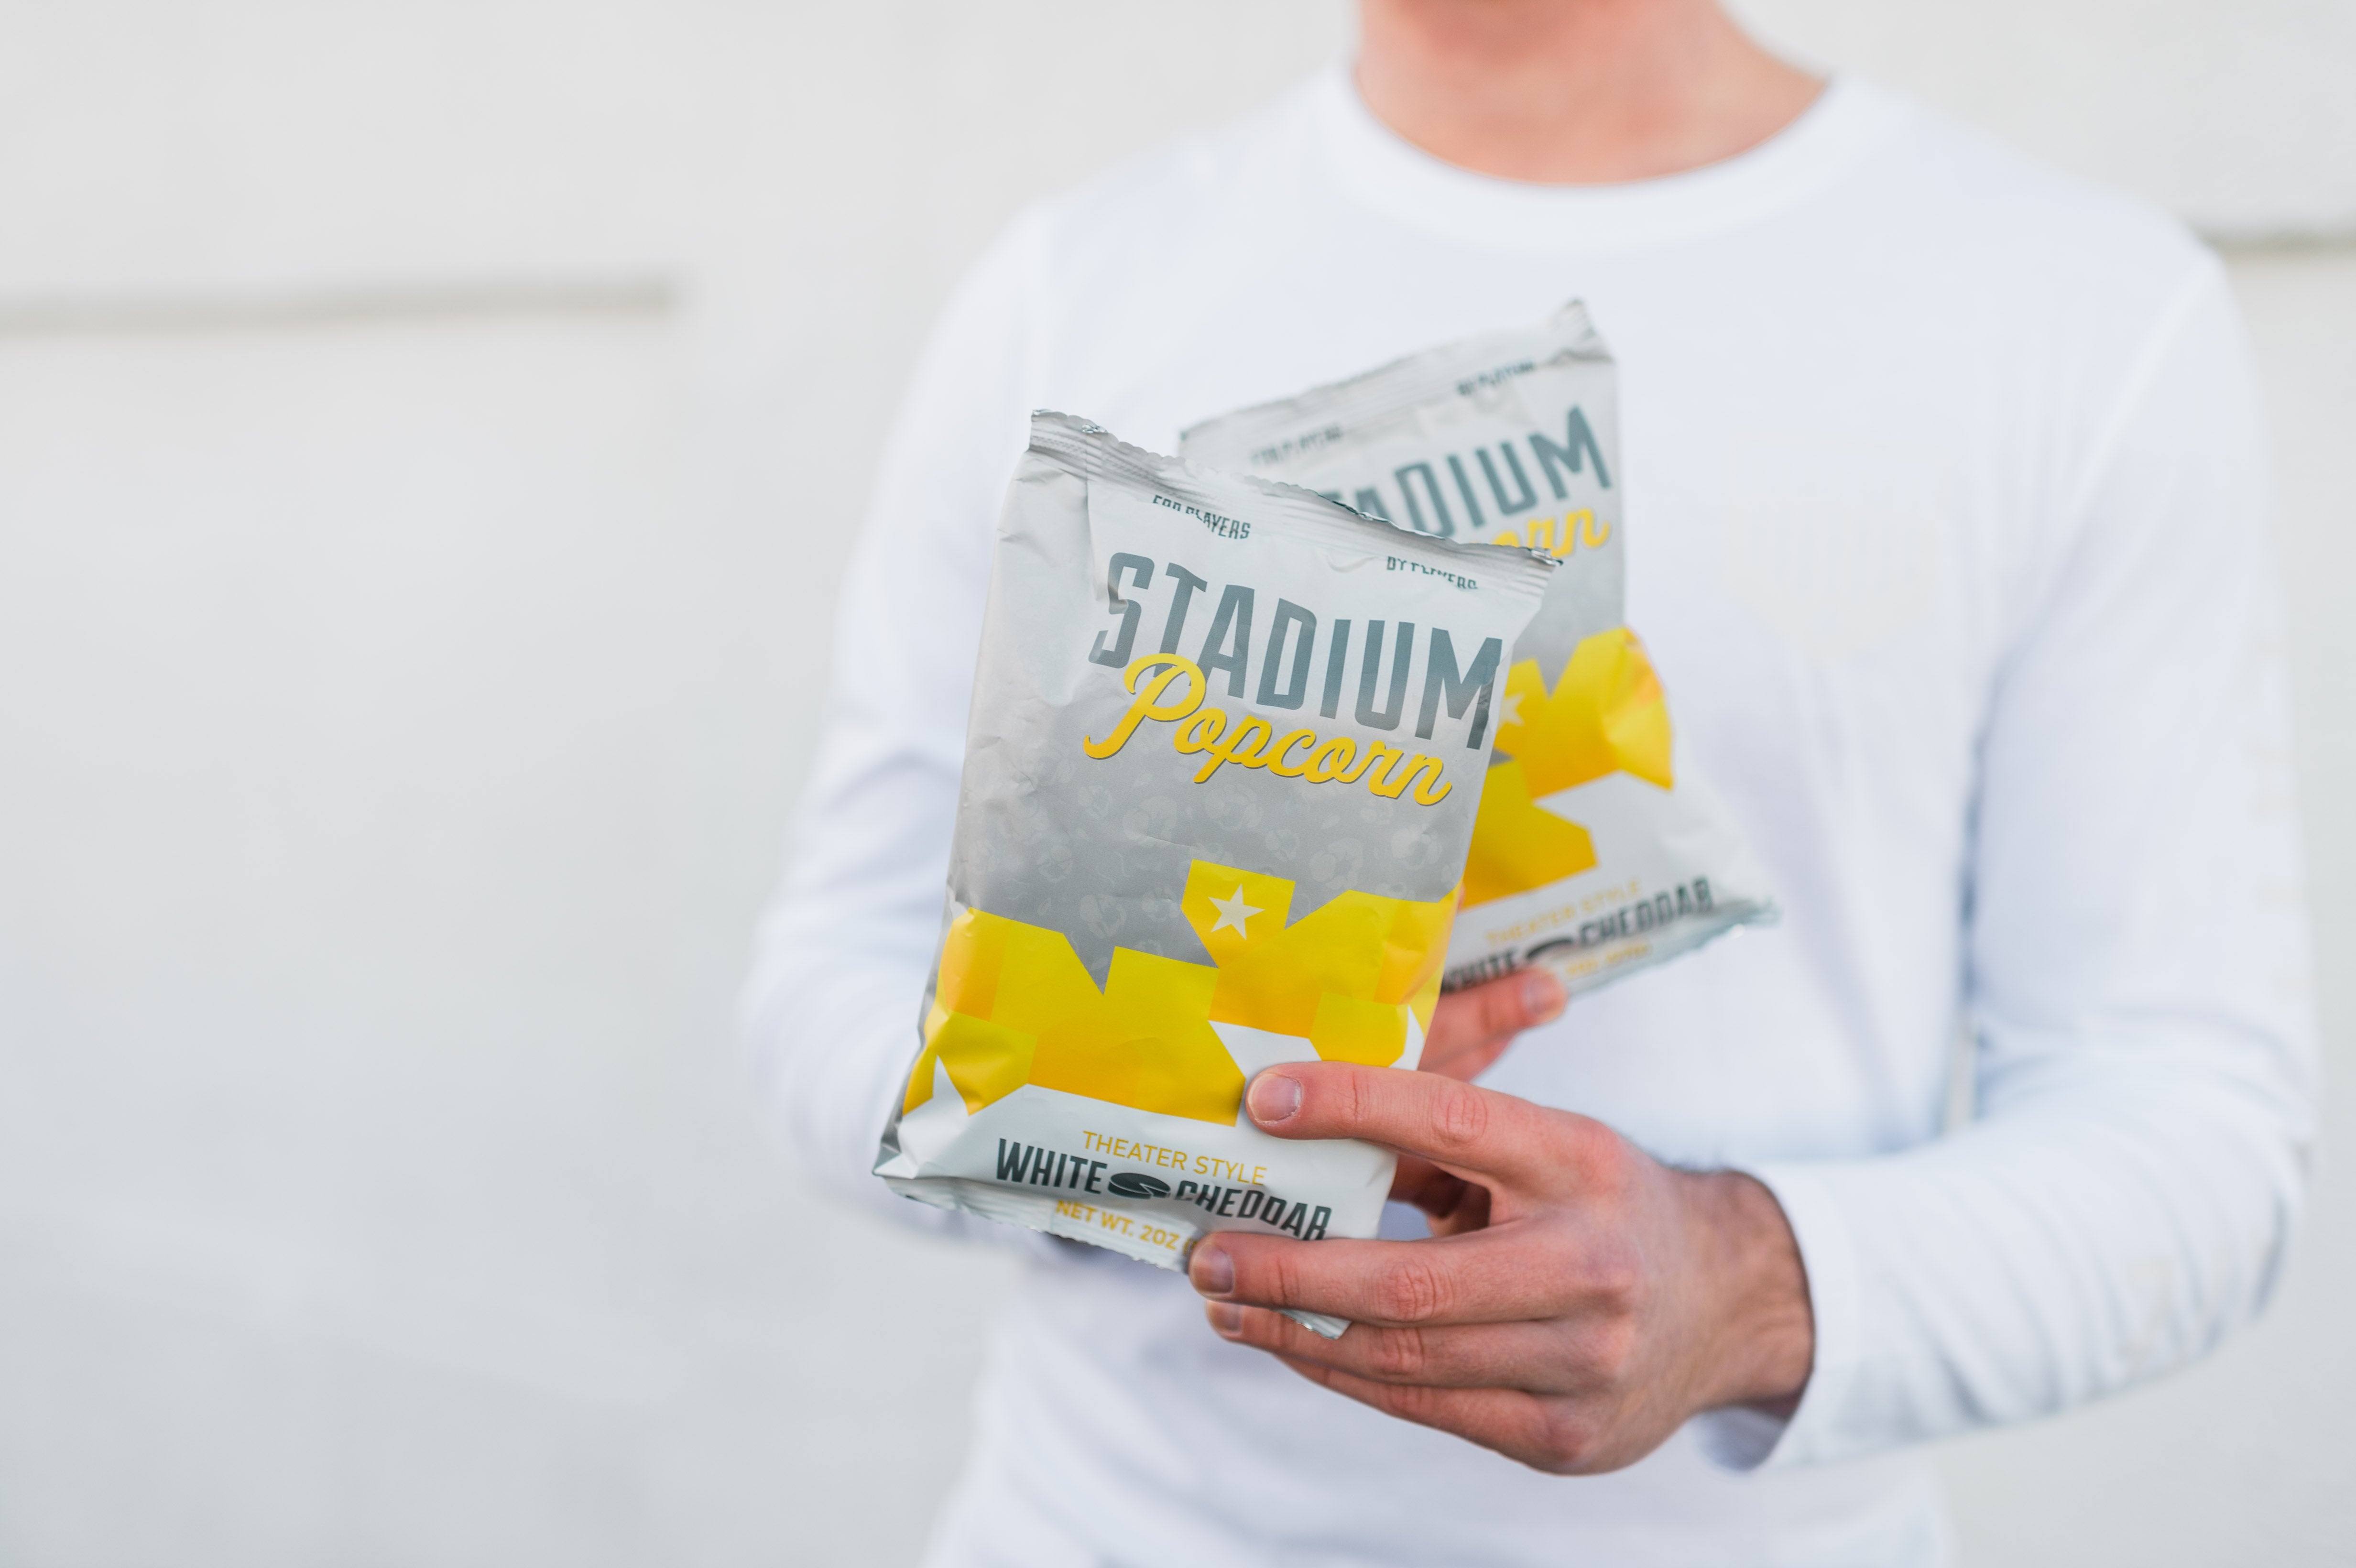 2 Bags of White Cheddar Stadium Popcorn